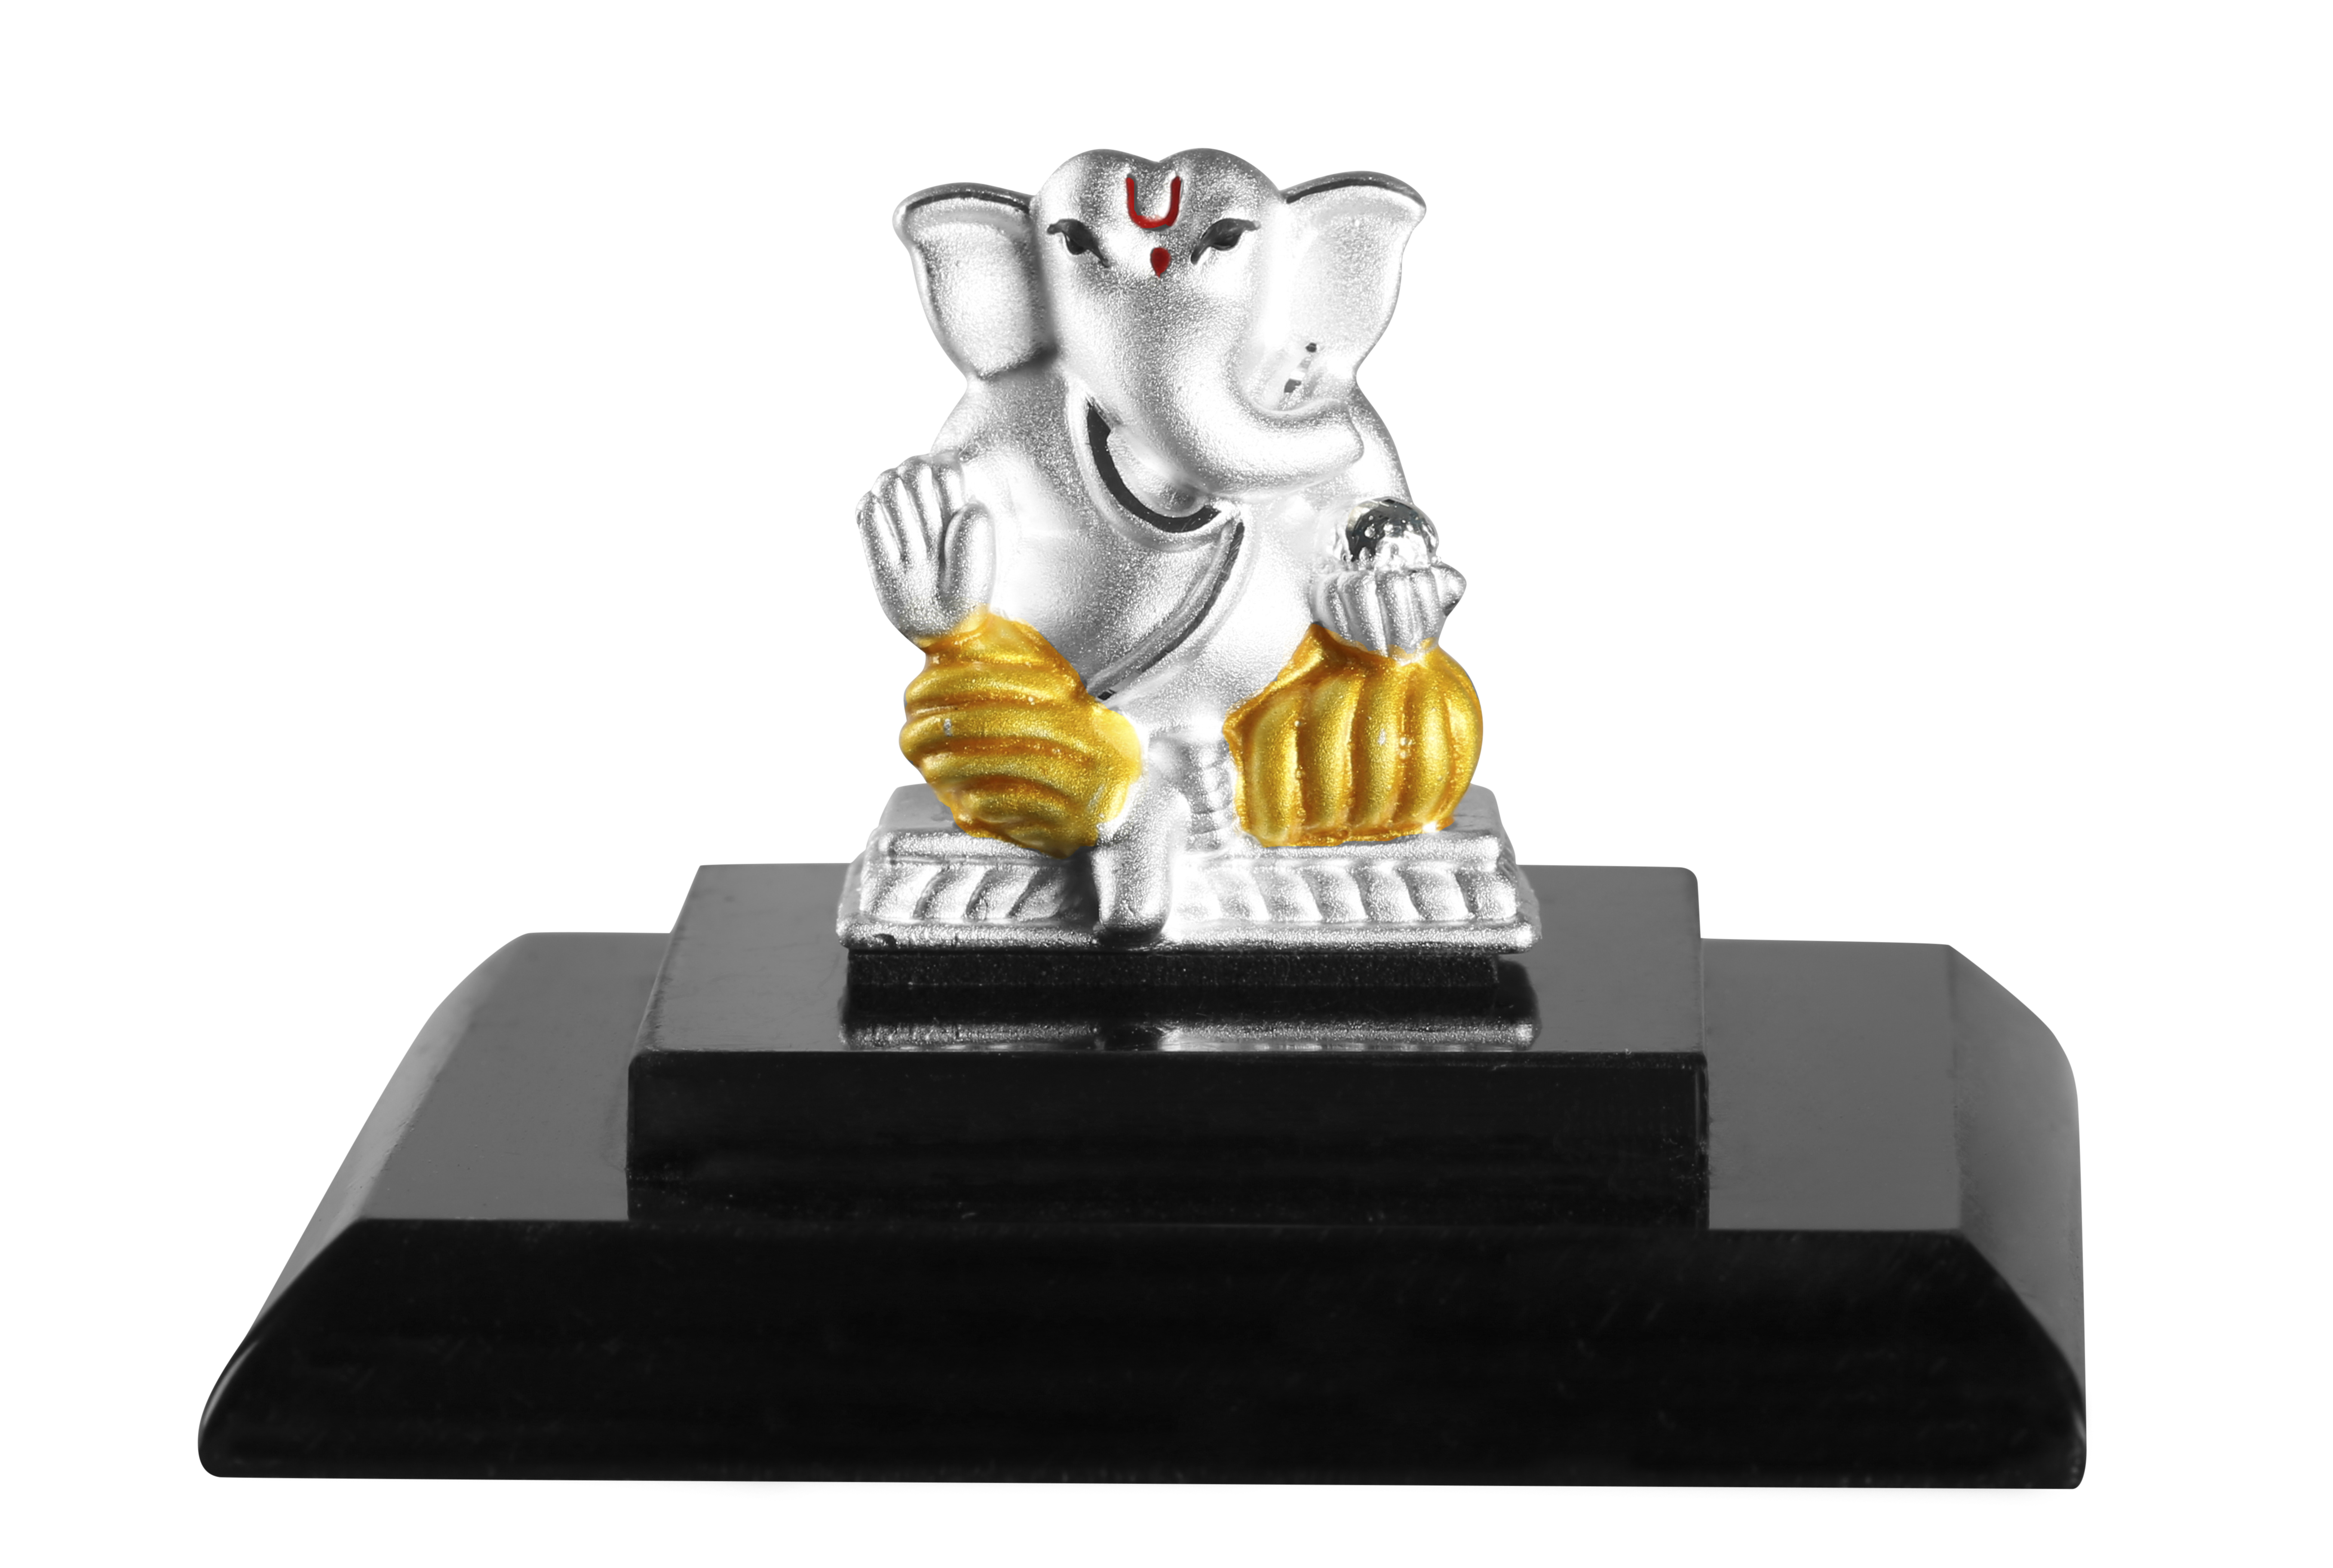 999 Pure Silver Ganesha Idol By Krysaliis Isvara - Krign_Ms10 Idols